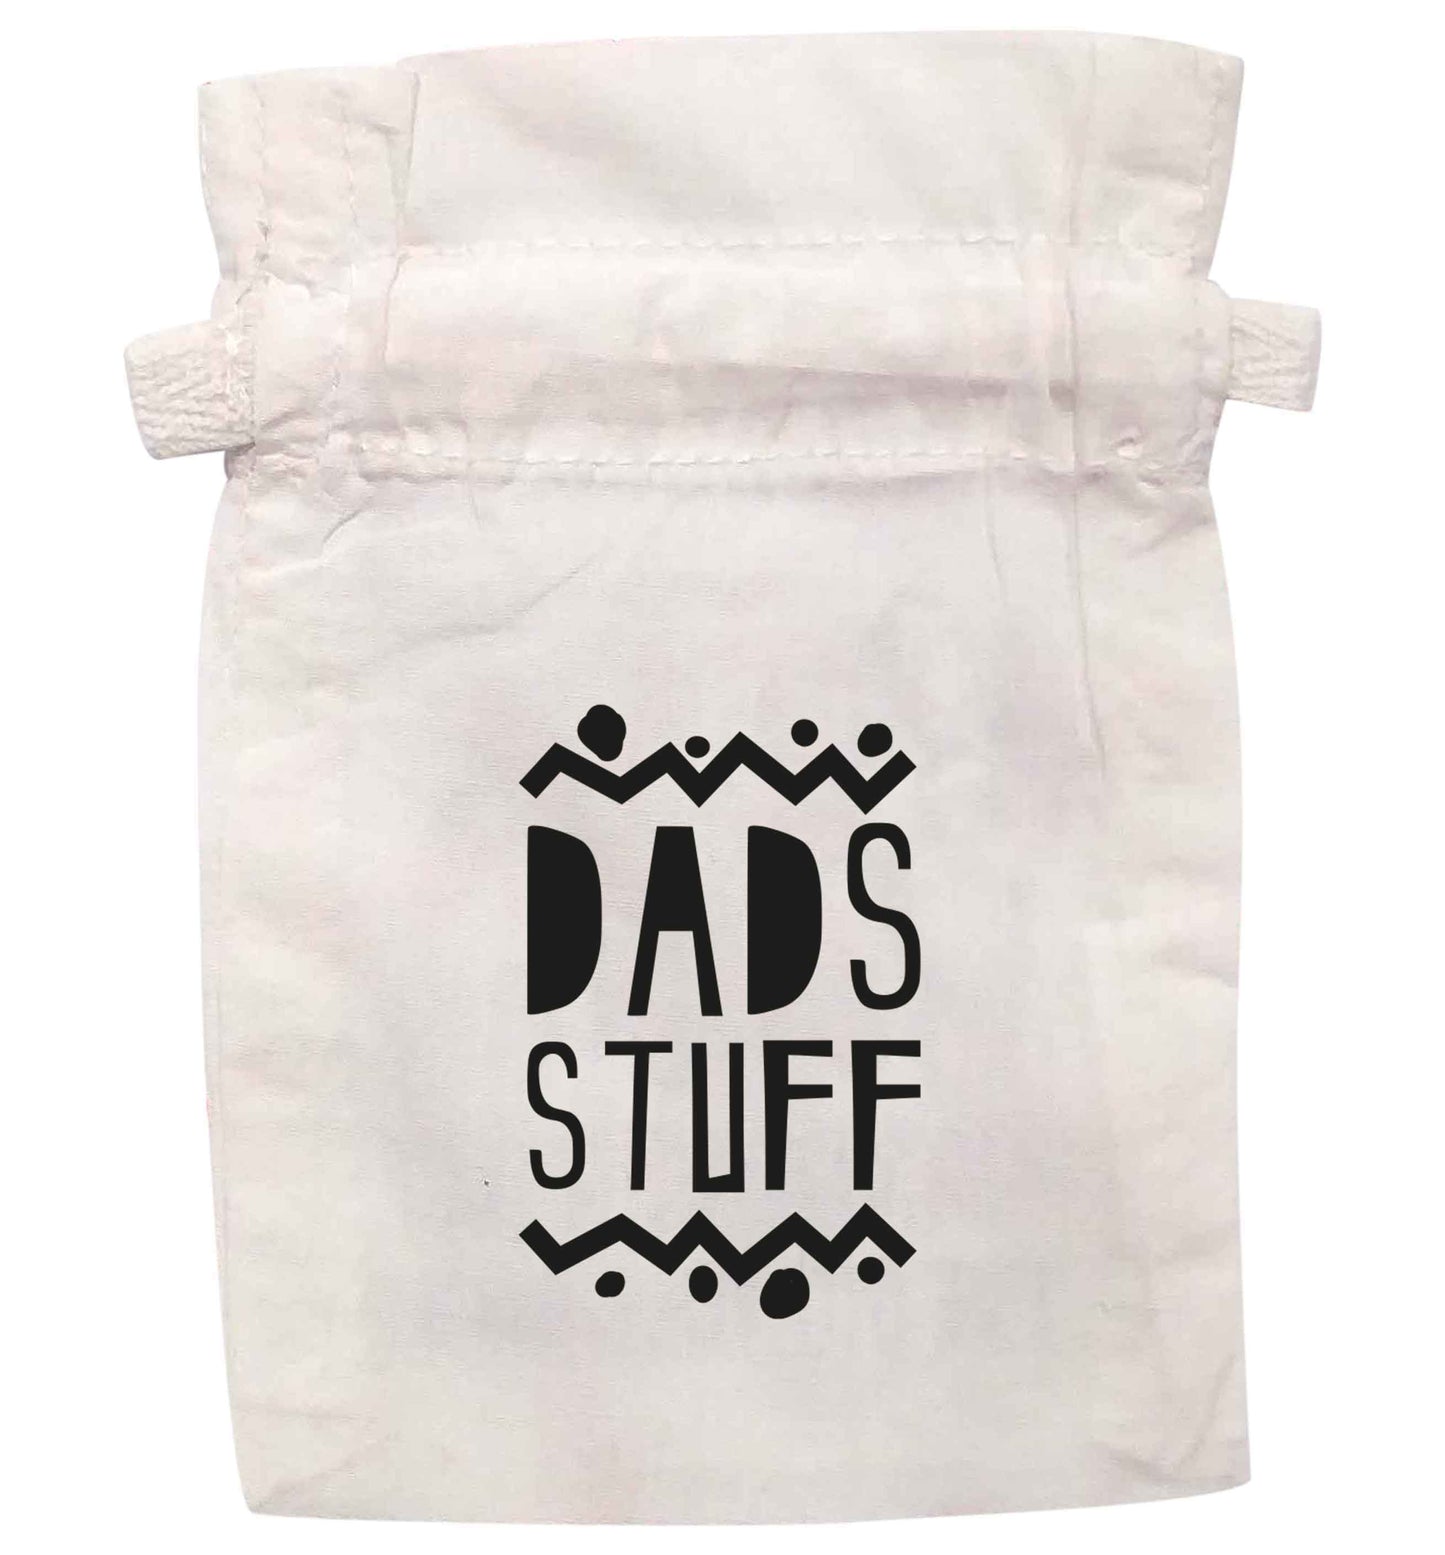 Dads stuff | XS - L | Pouch / Drawstring bag / Sack | Organic Cotton | Bulk discounts available!